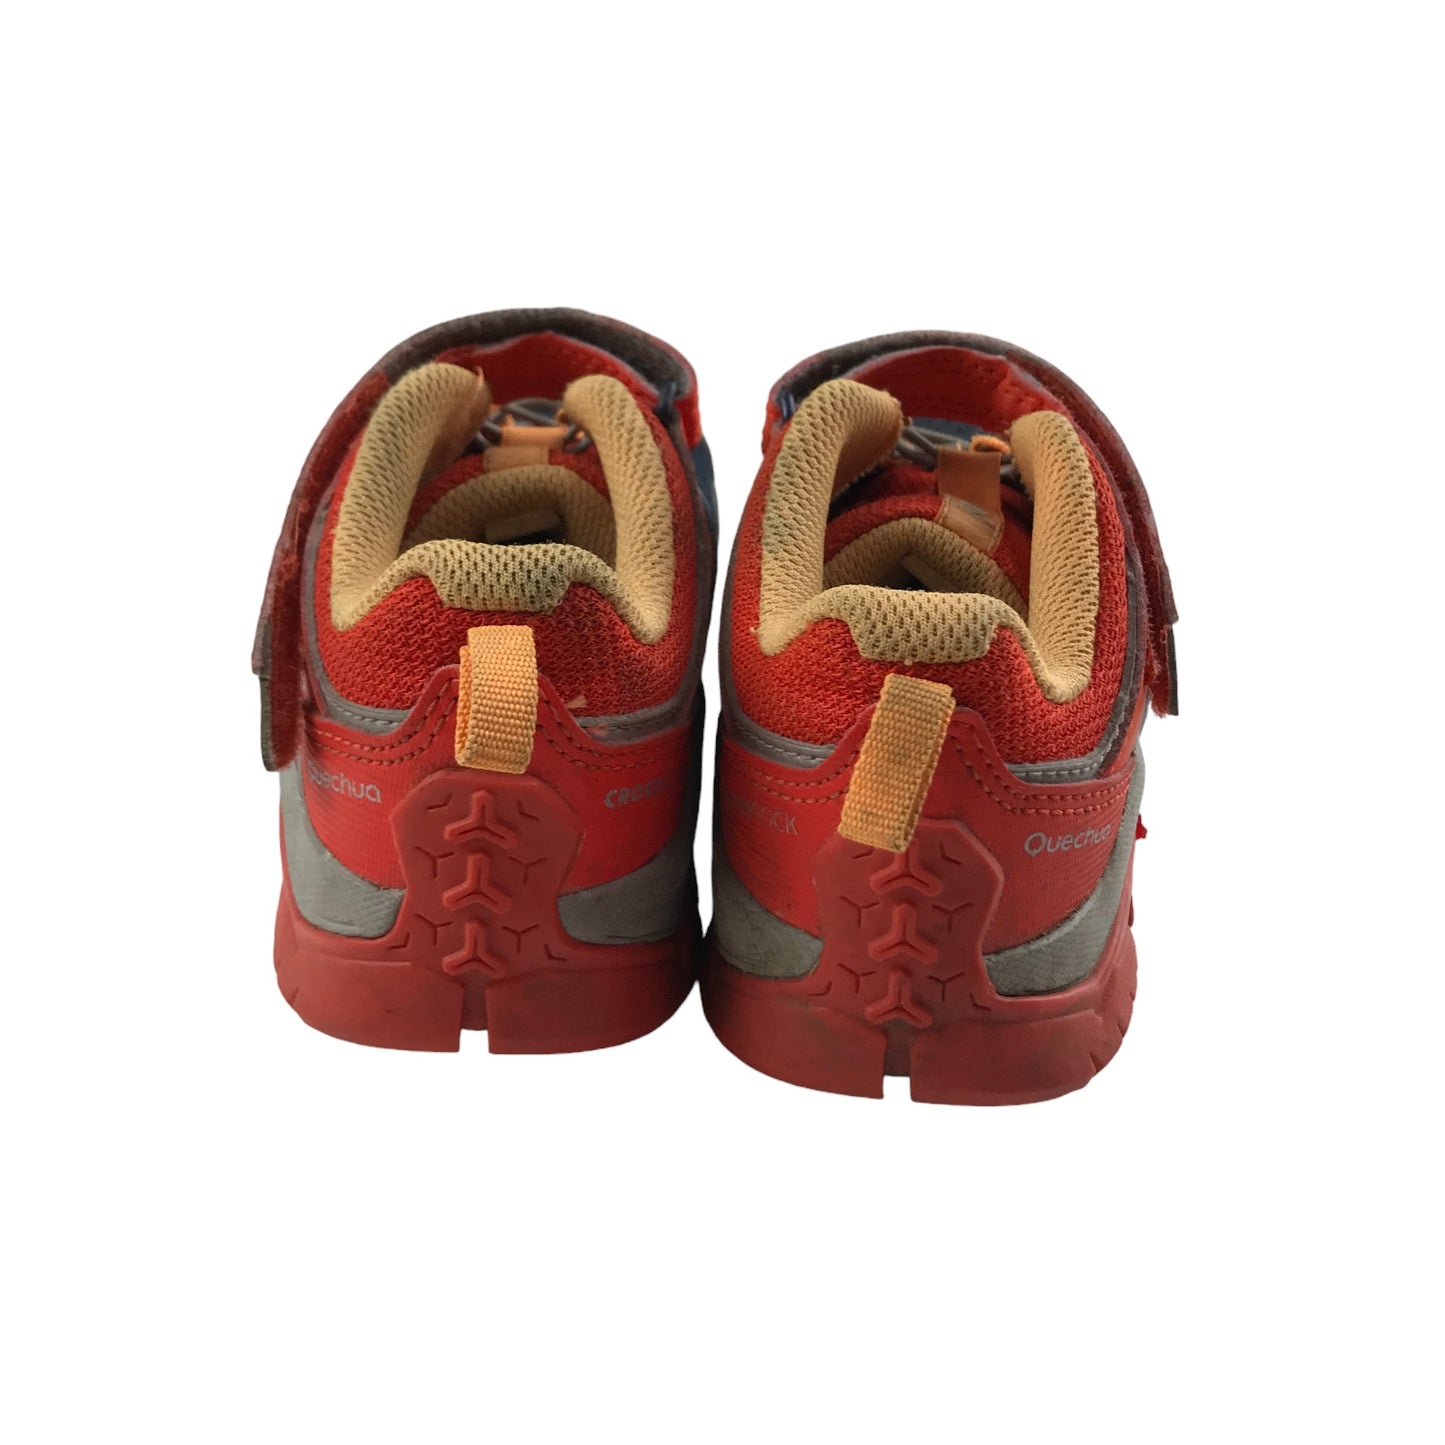 Decathlon Walking Shoes Shoe Size 12 Junior Navy and Orange CrossRock